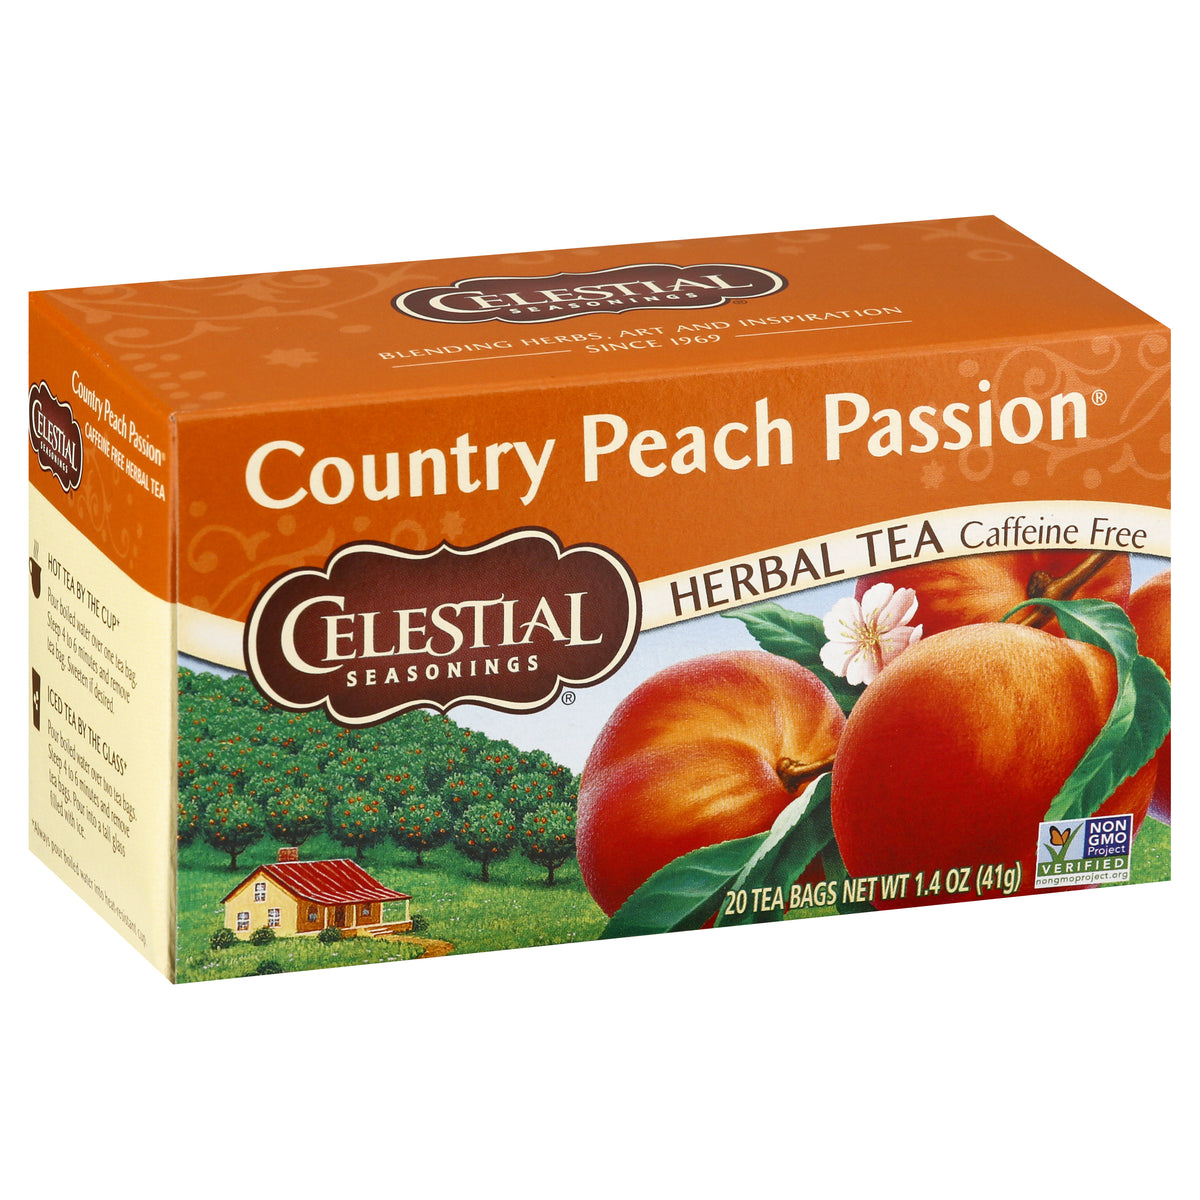 Celestial Seasonings Herbal Tea, Caffeine Free, Country Peach